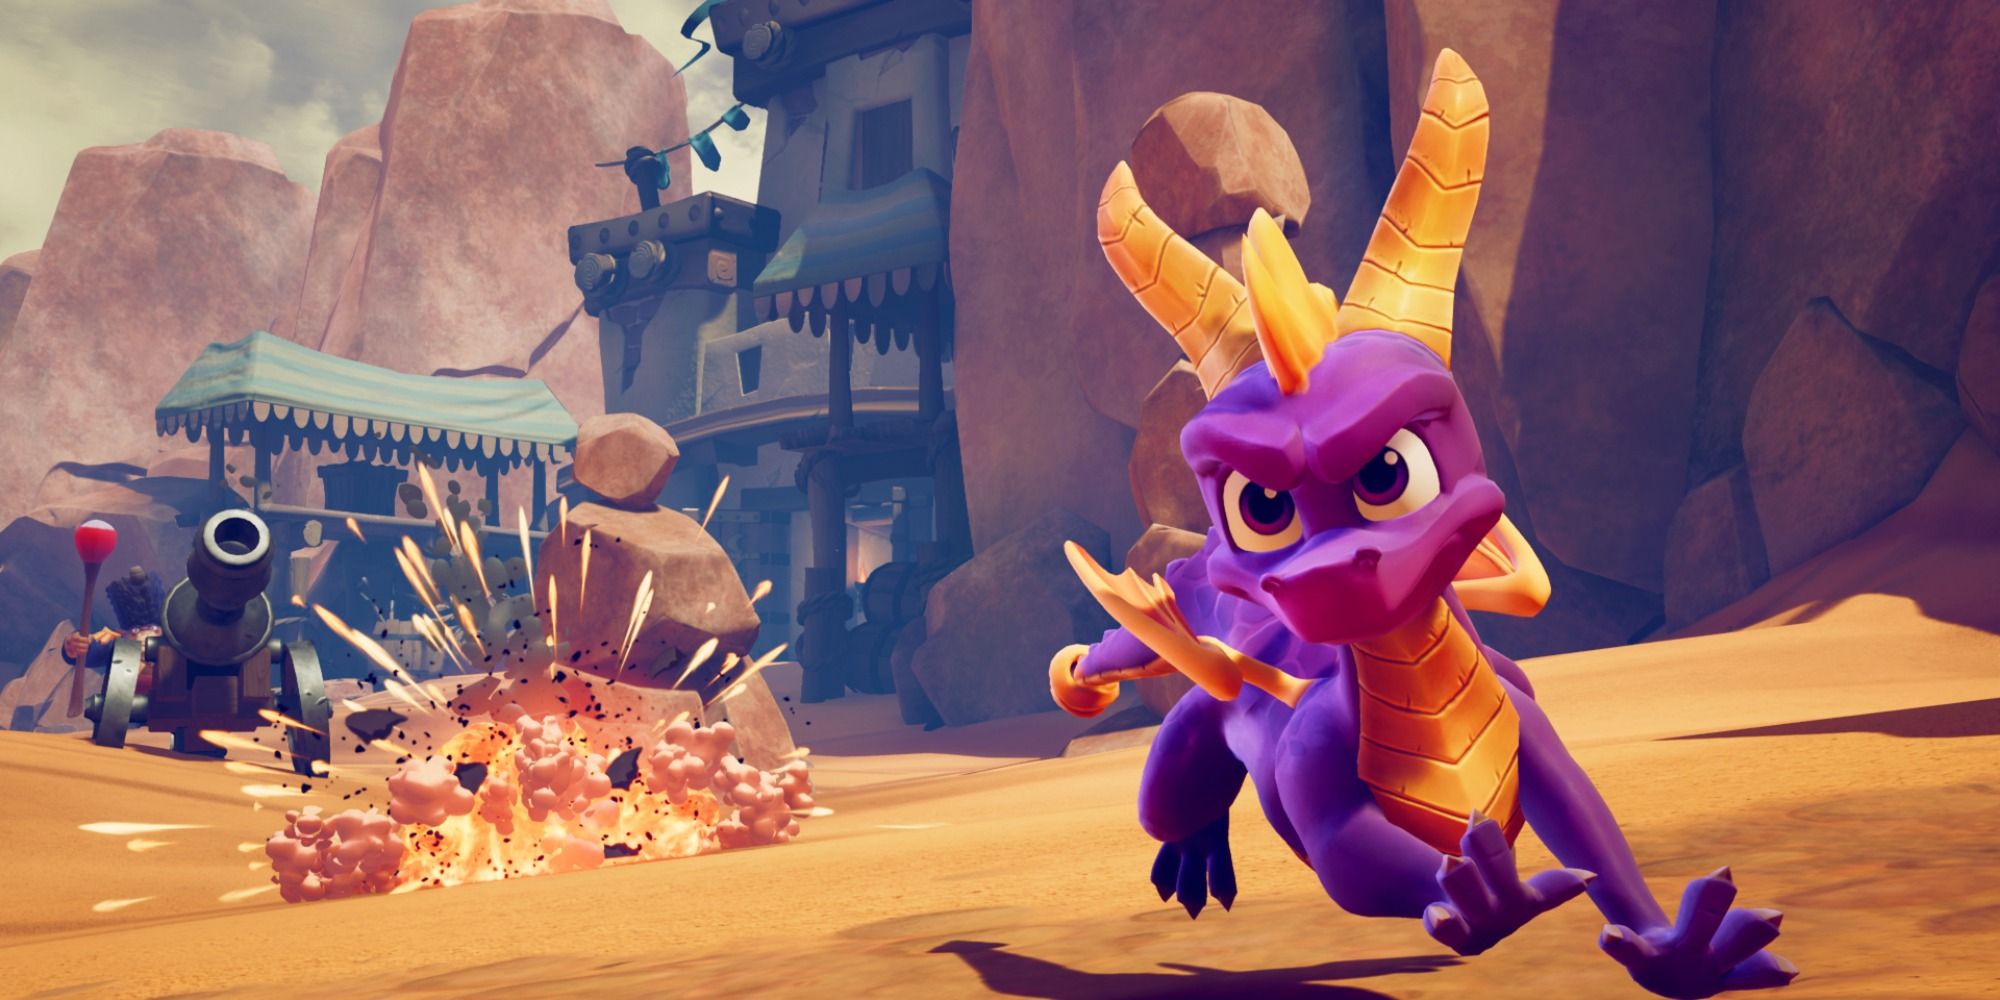 Spyro running from an explosion